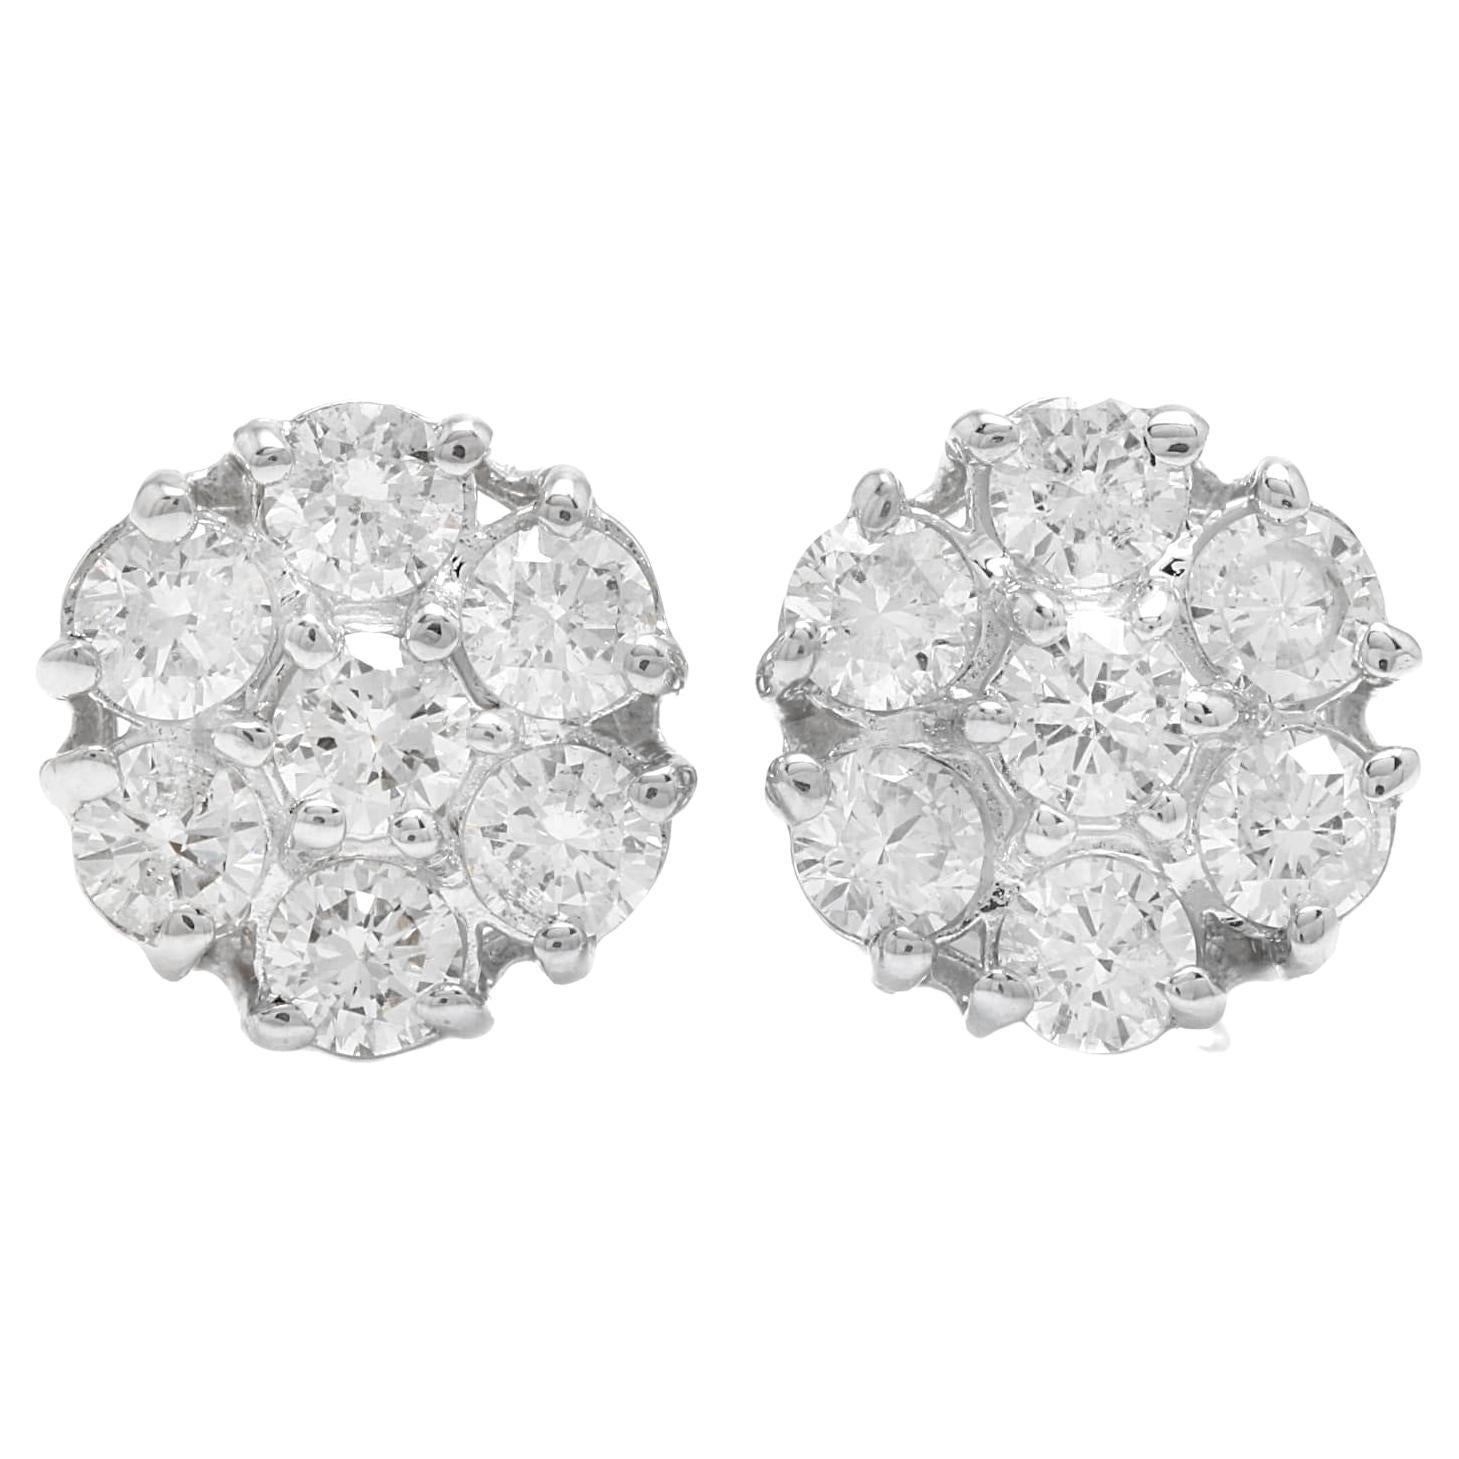 Exquisite 1.15 Carat Natural Diamond 14 Karat Solid White Gold Stud Earrings